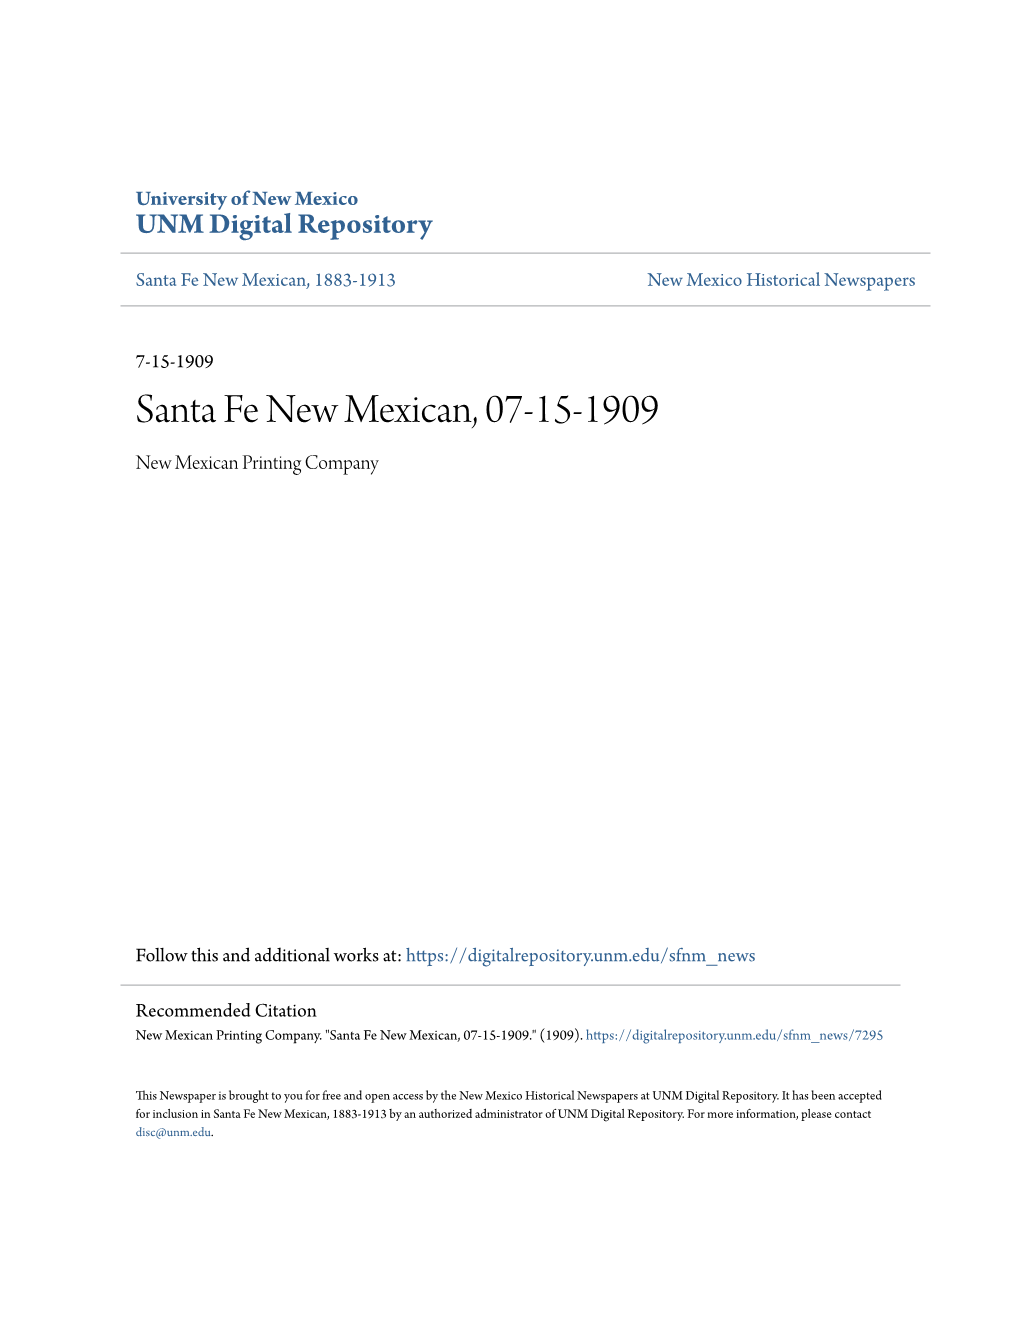 Santa Fe New Mexican, 07-15-1909 New Mexican Printing Company